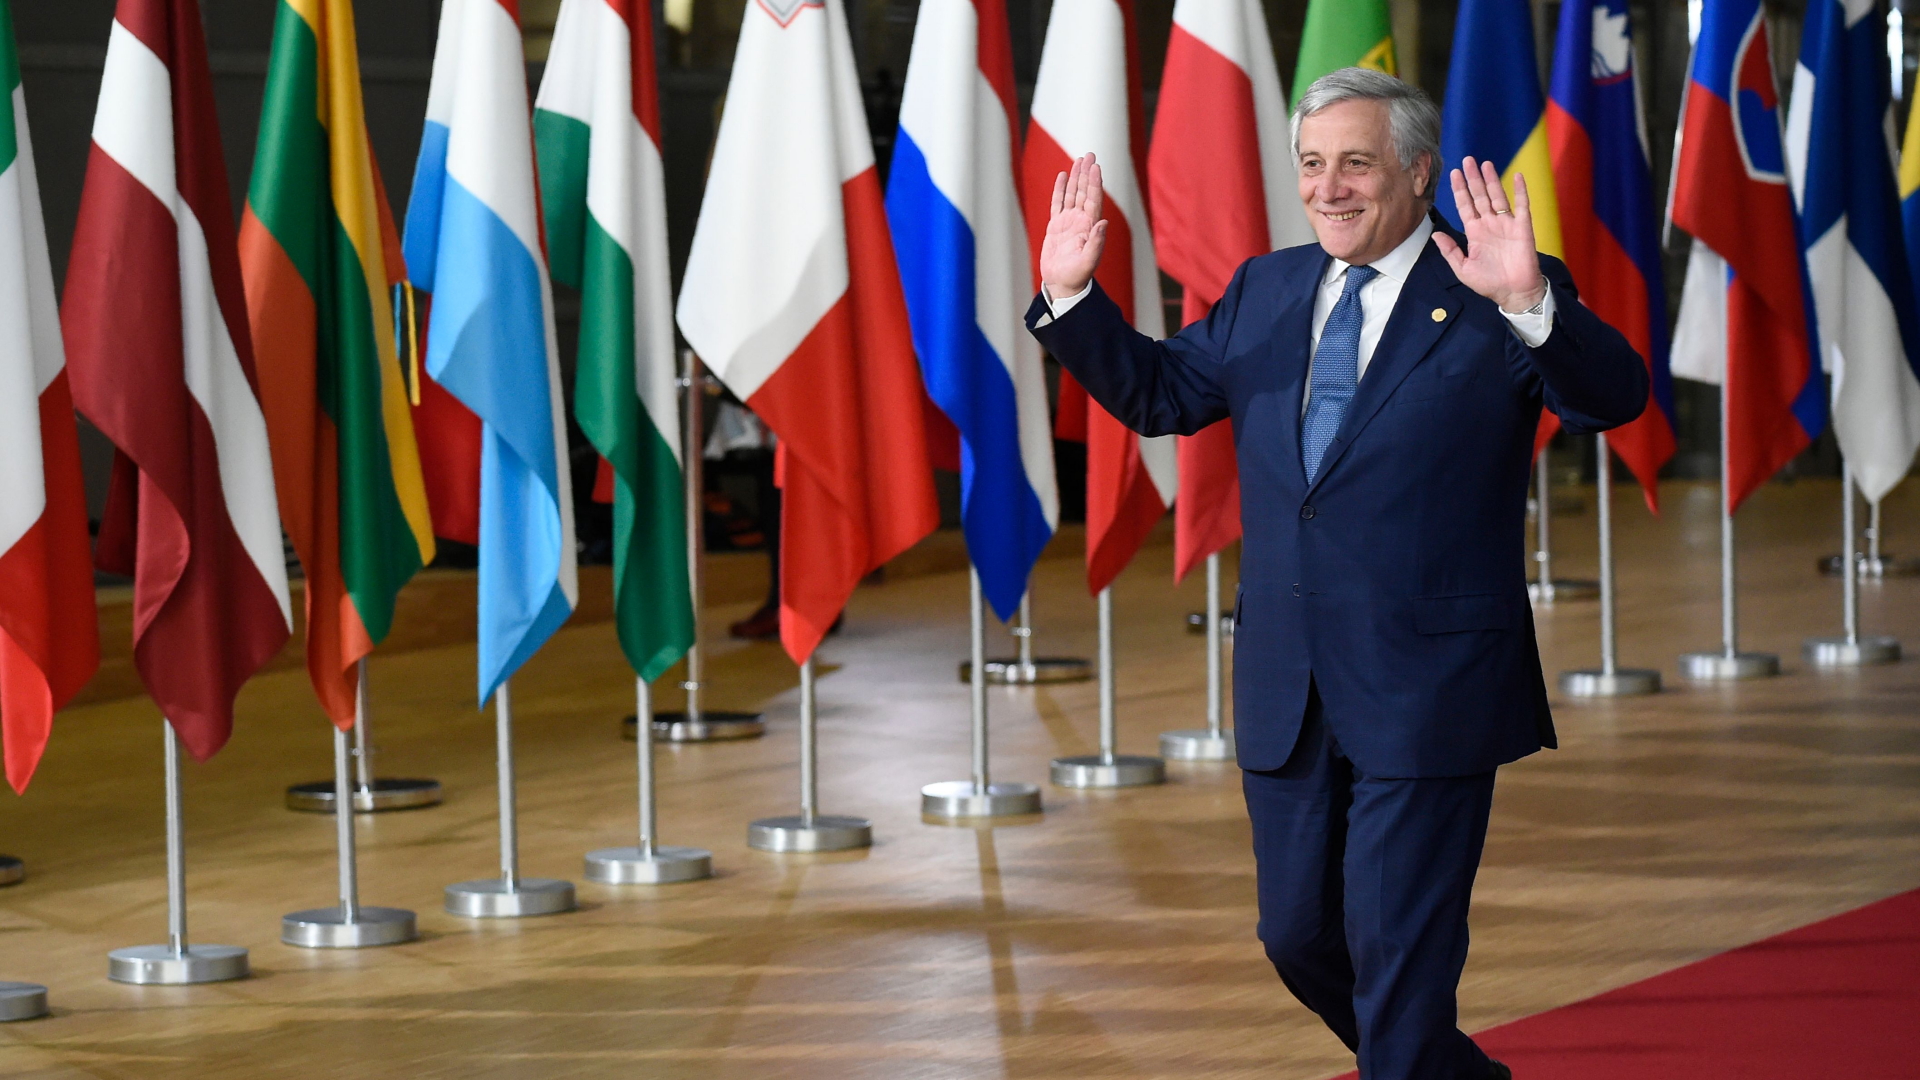 EU-Parlamentspräsident Antonio Tajani schreitet an den Flaggen der EU-Mitgliedsstaaten entlang.